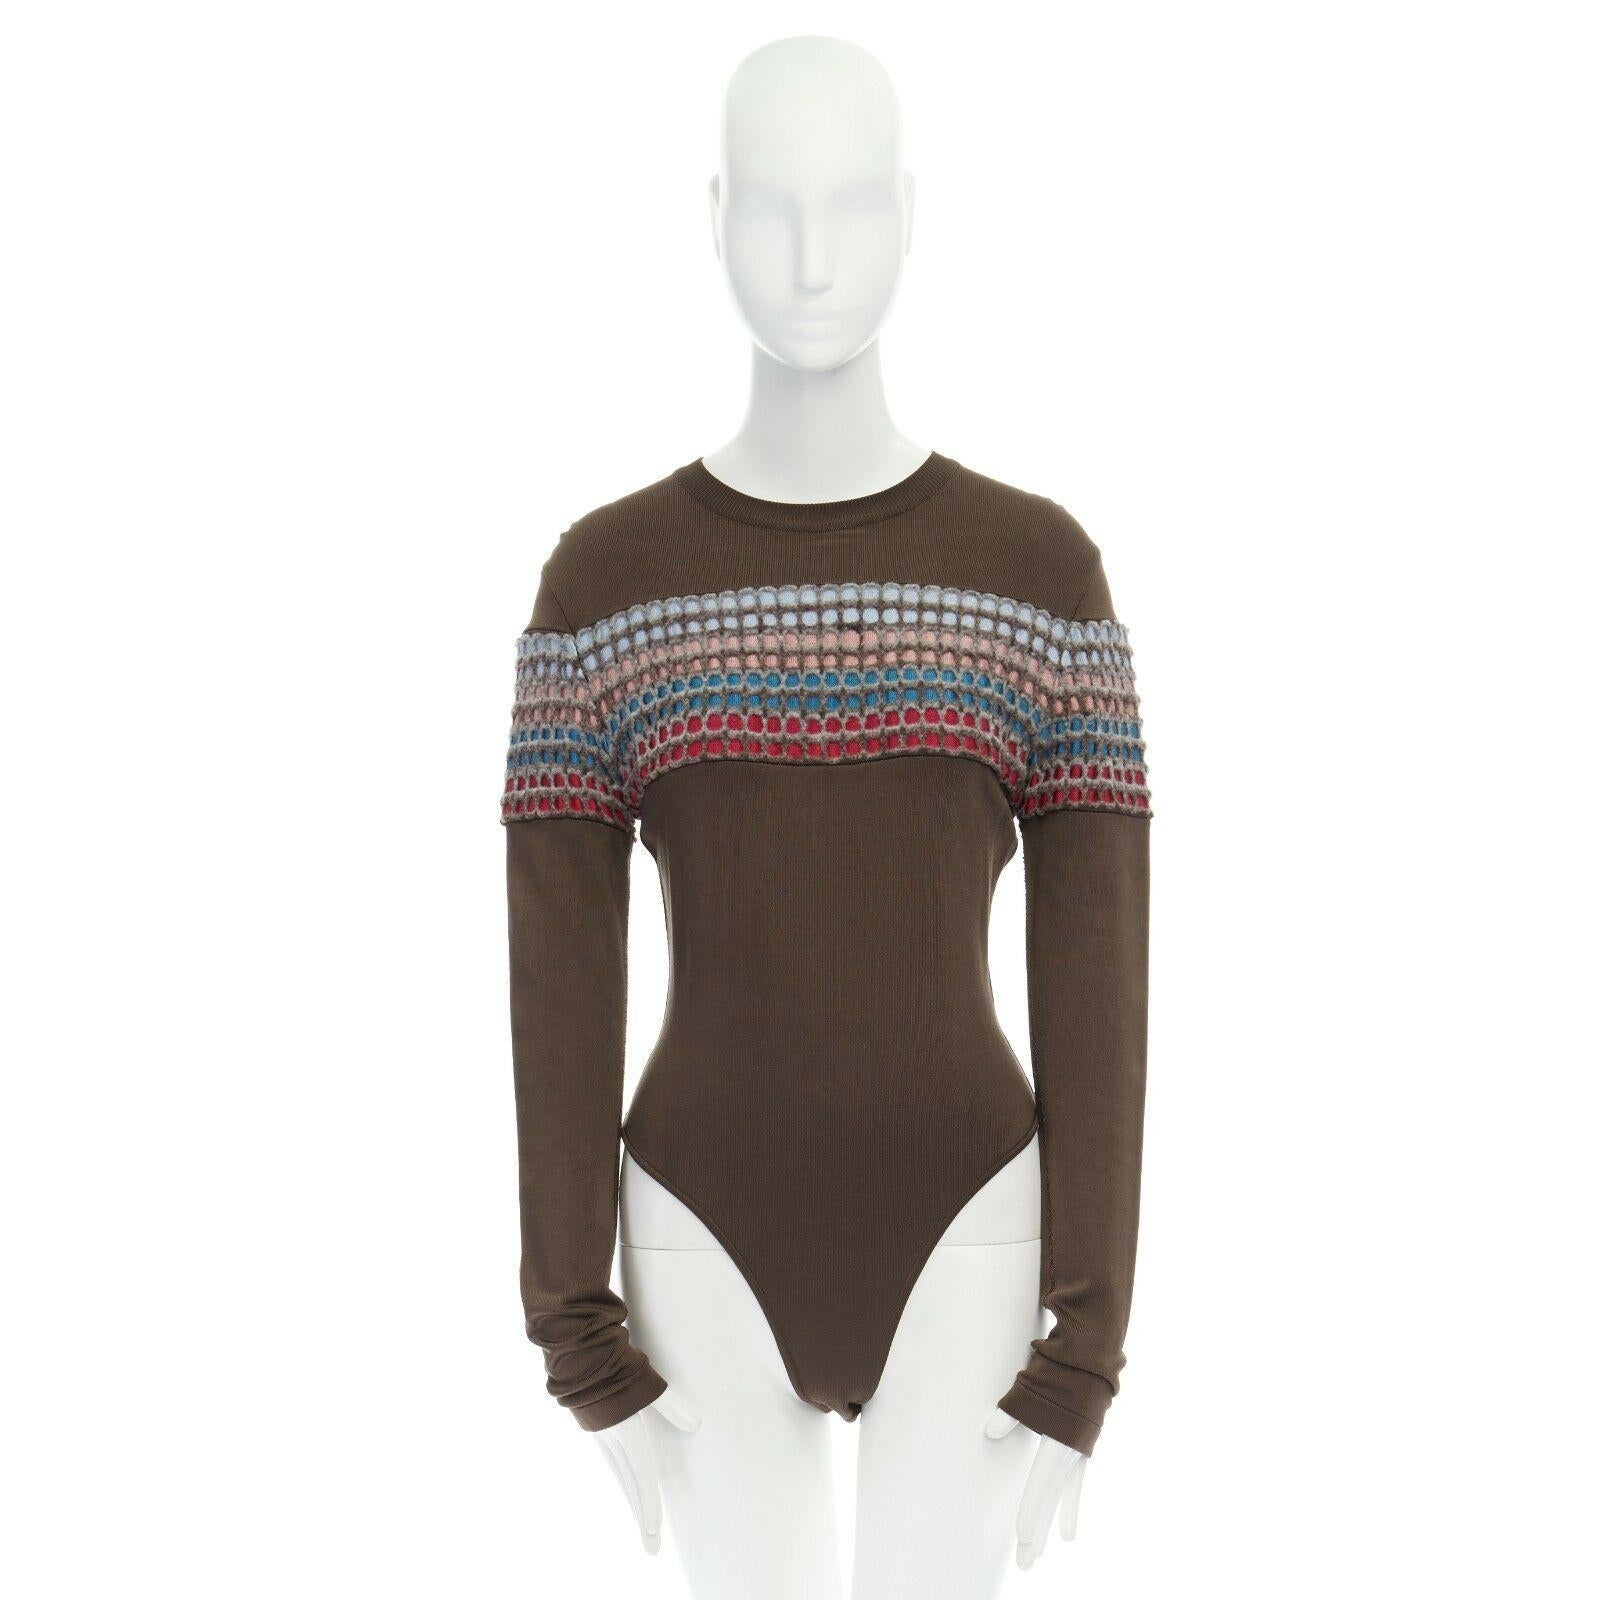 Black ALAIA Vintage multicolor grid knit band bodycon bodysuit rayon top S US4 UK8